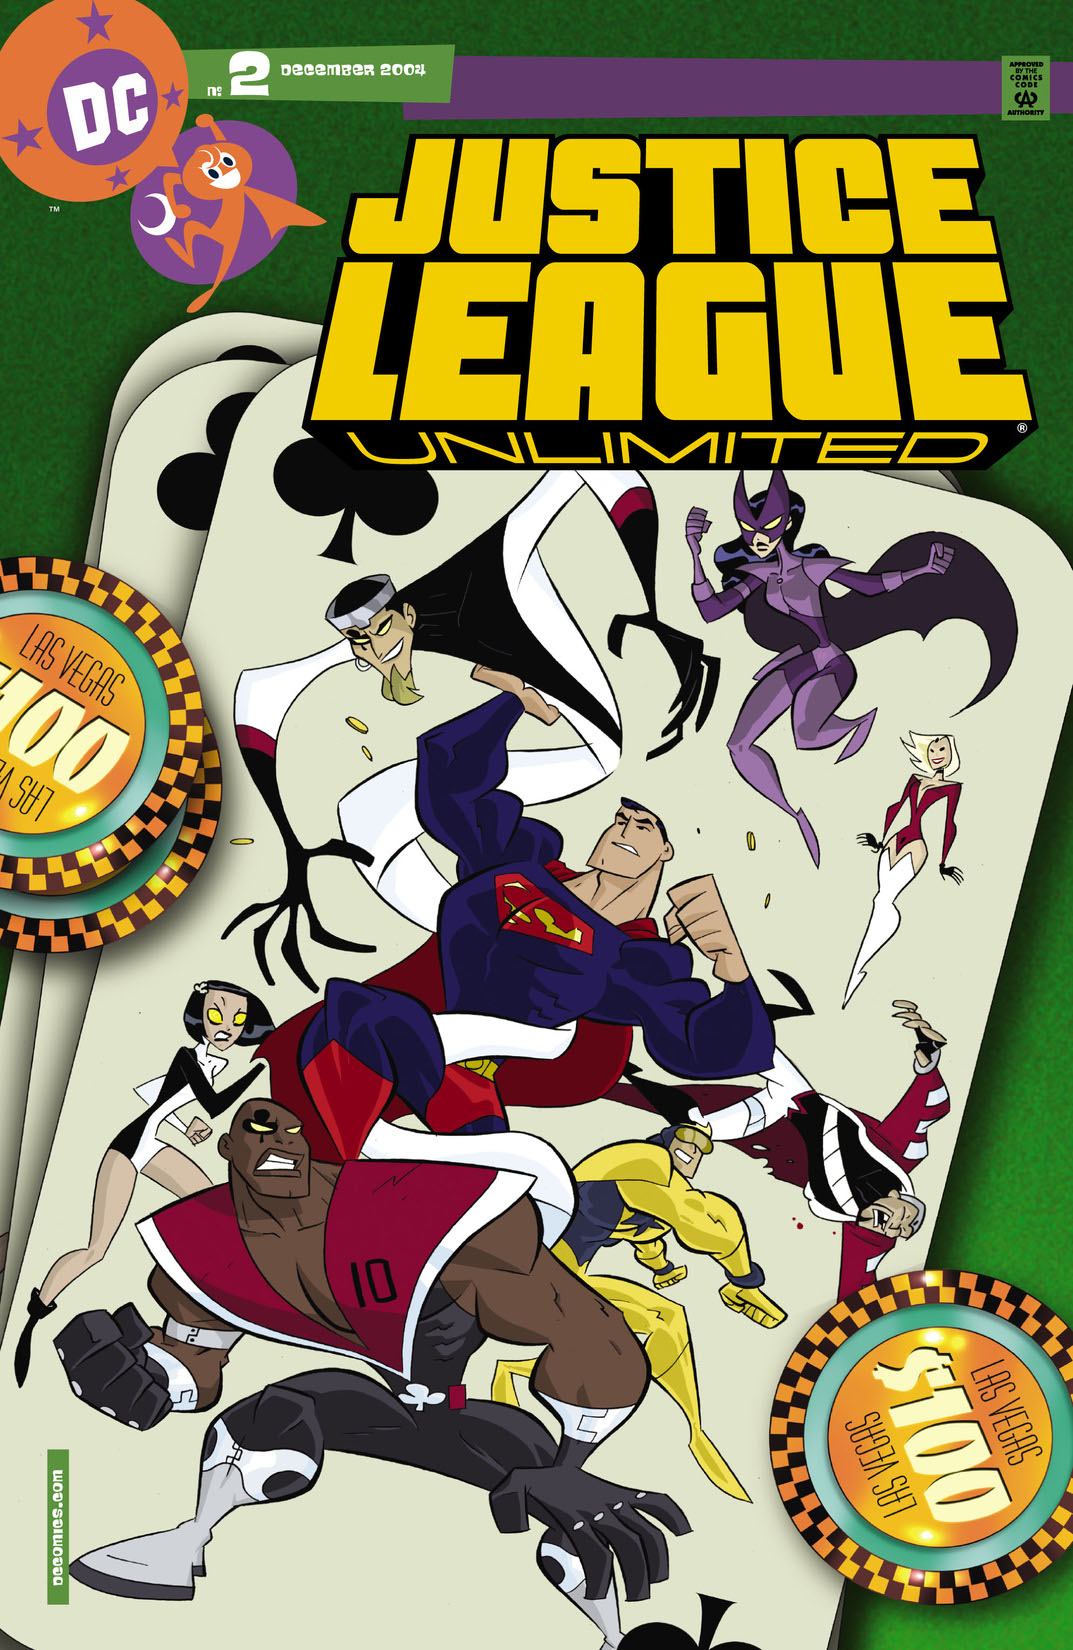 Justice League Unlimited #2 preview images